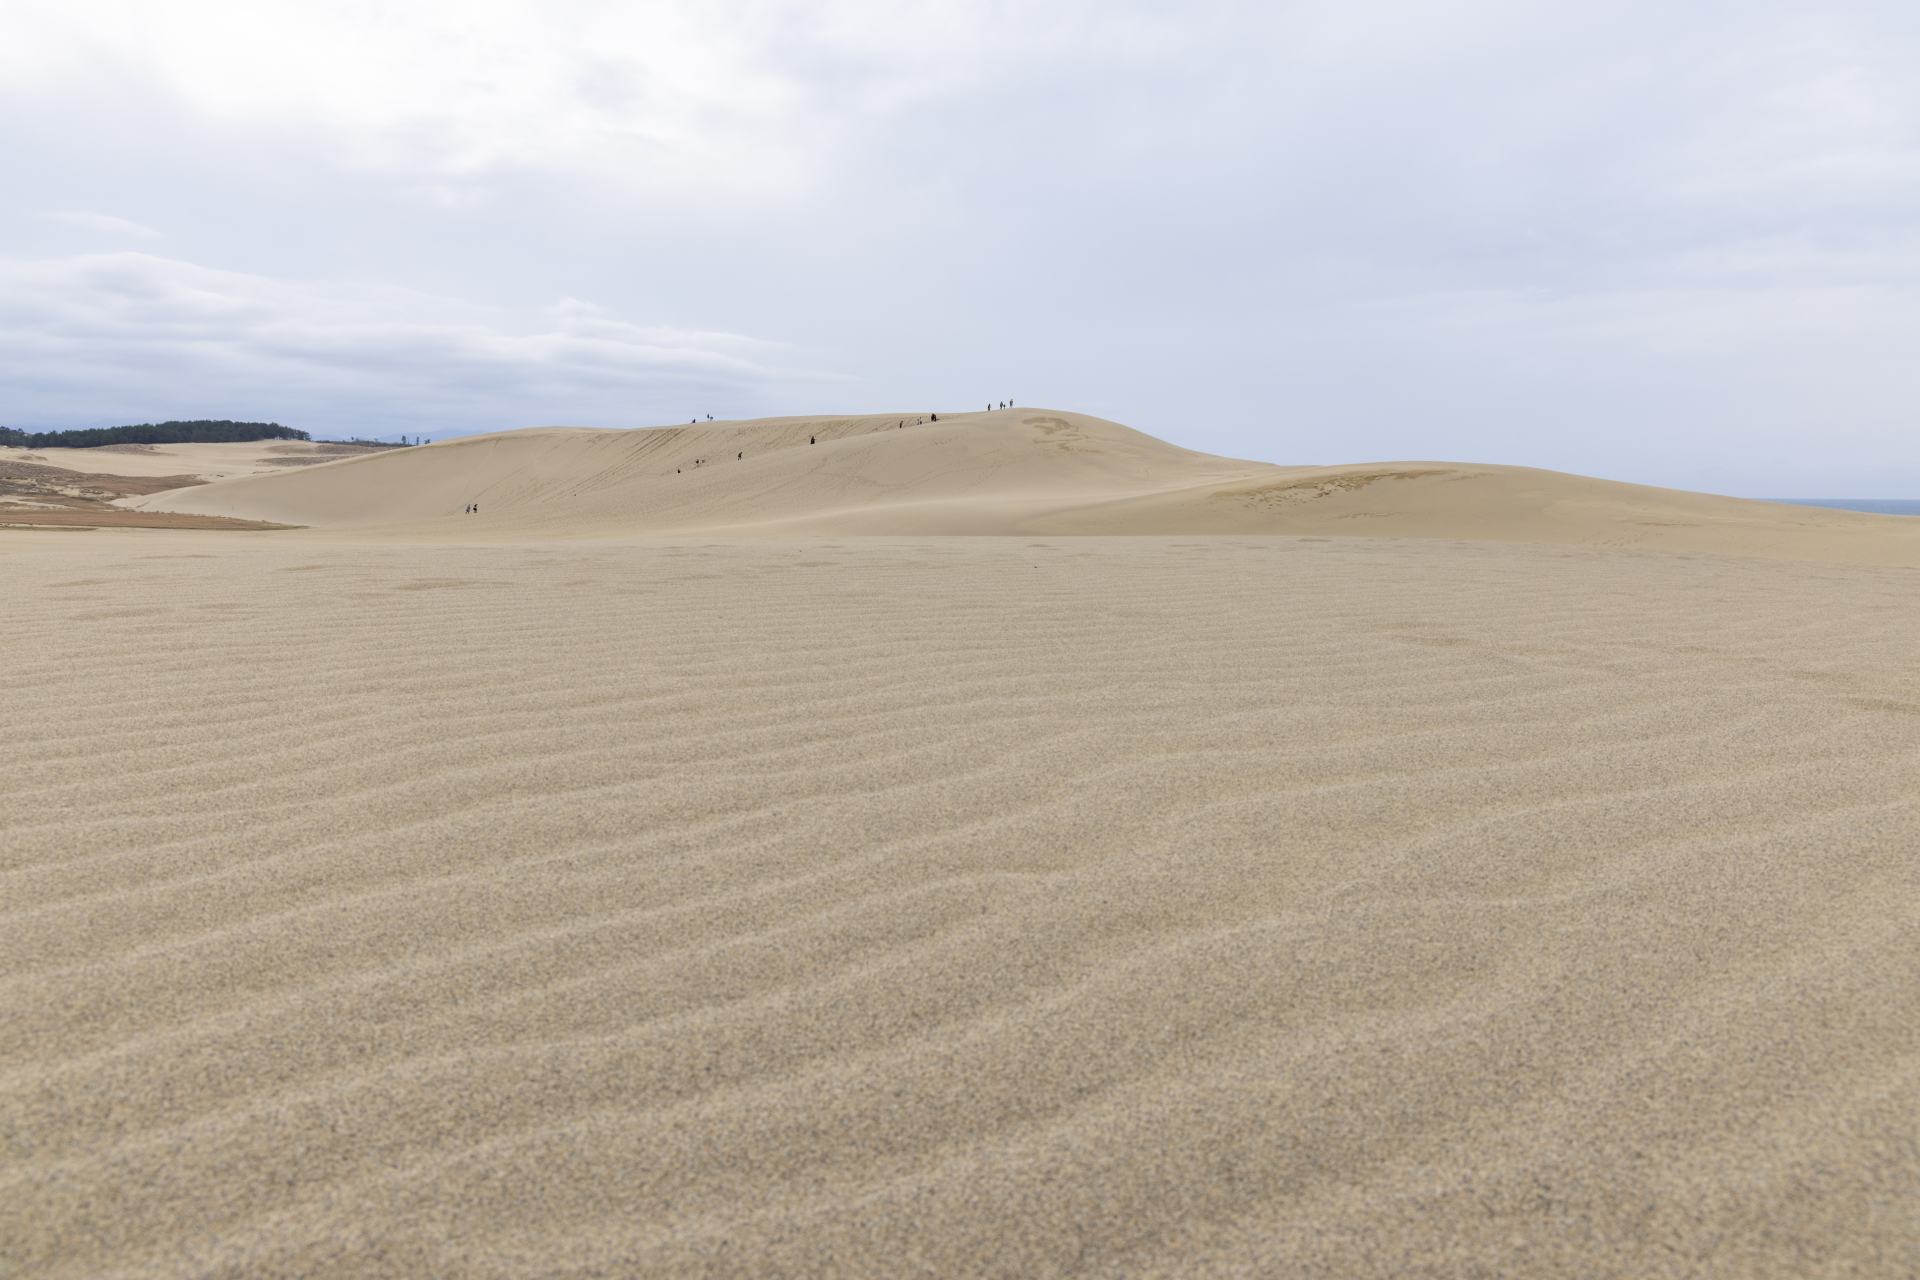 The beautiful sand dunes of Tottori.